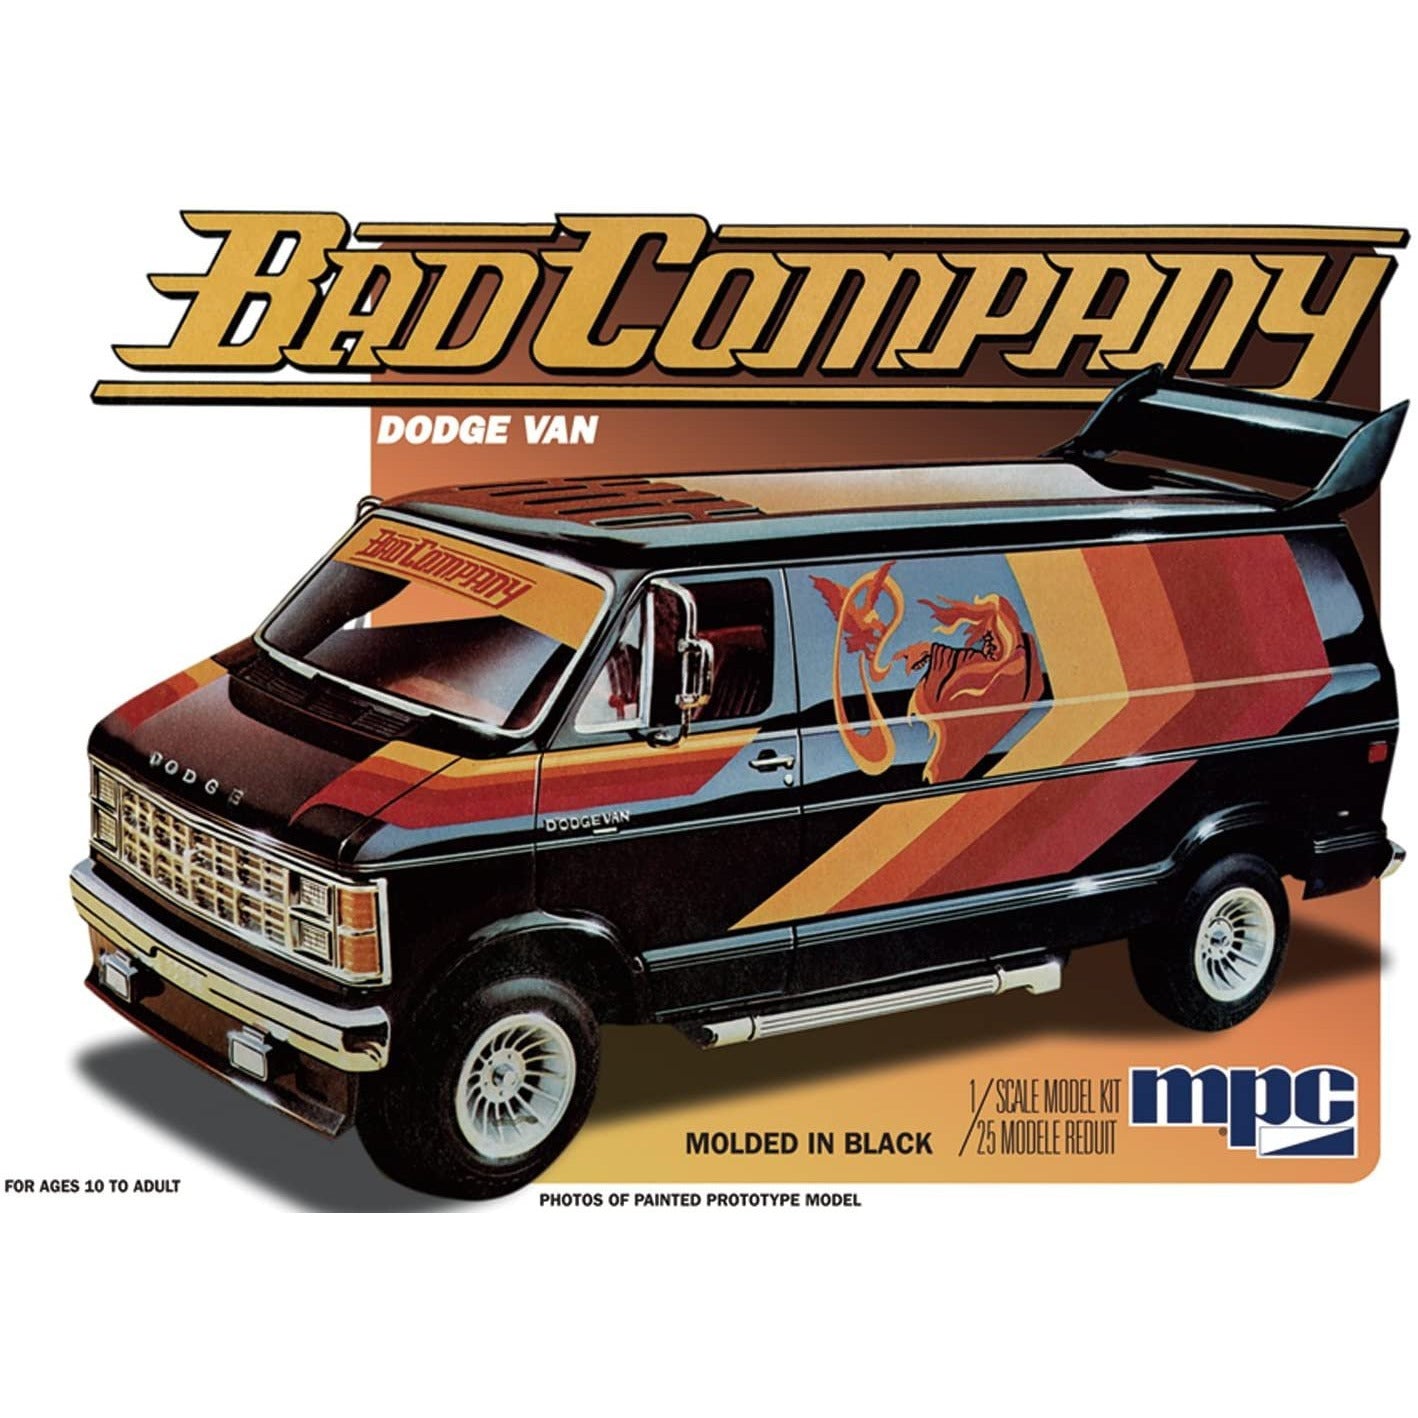 1982 Dodge Van Bad Company 1/25 by MPC